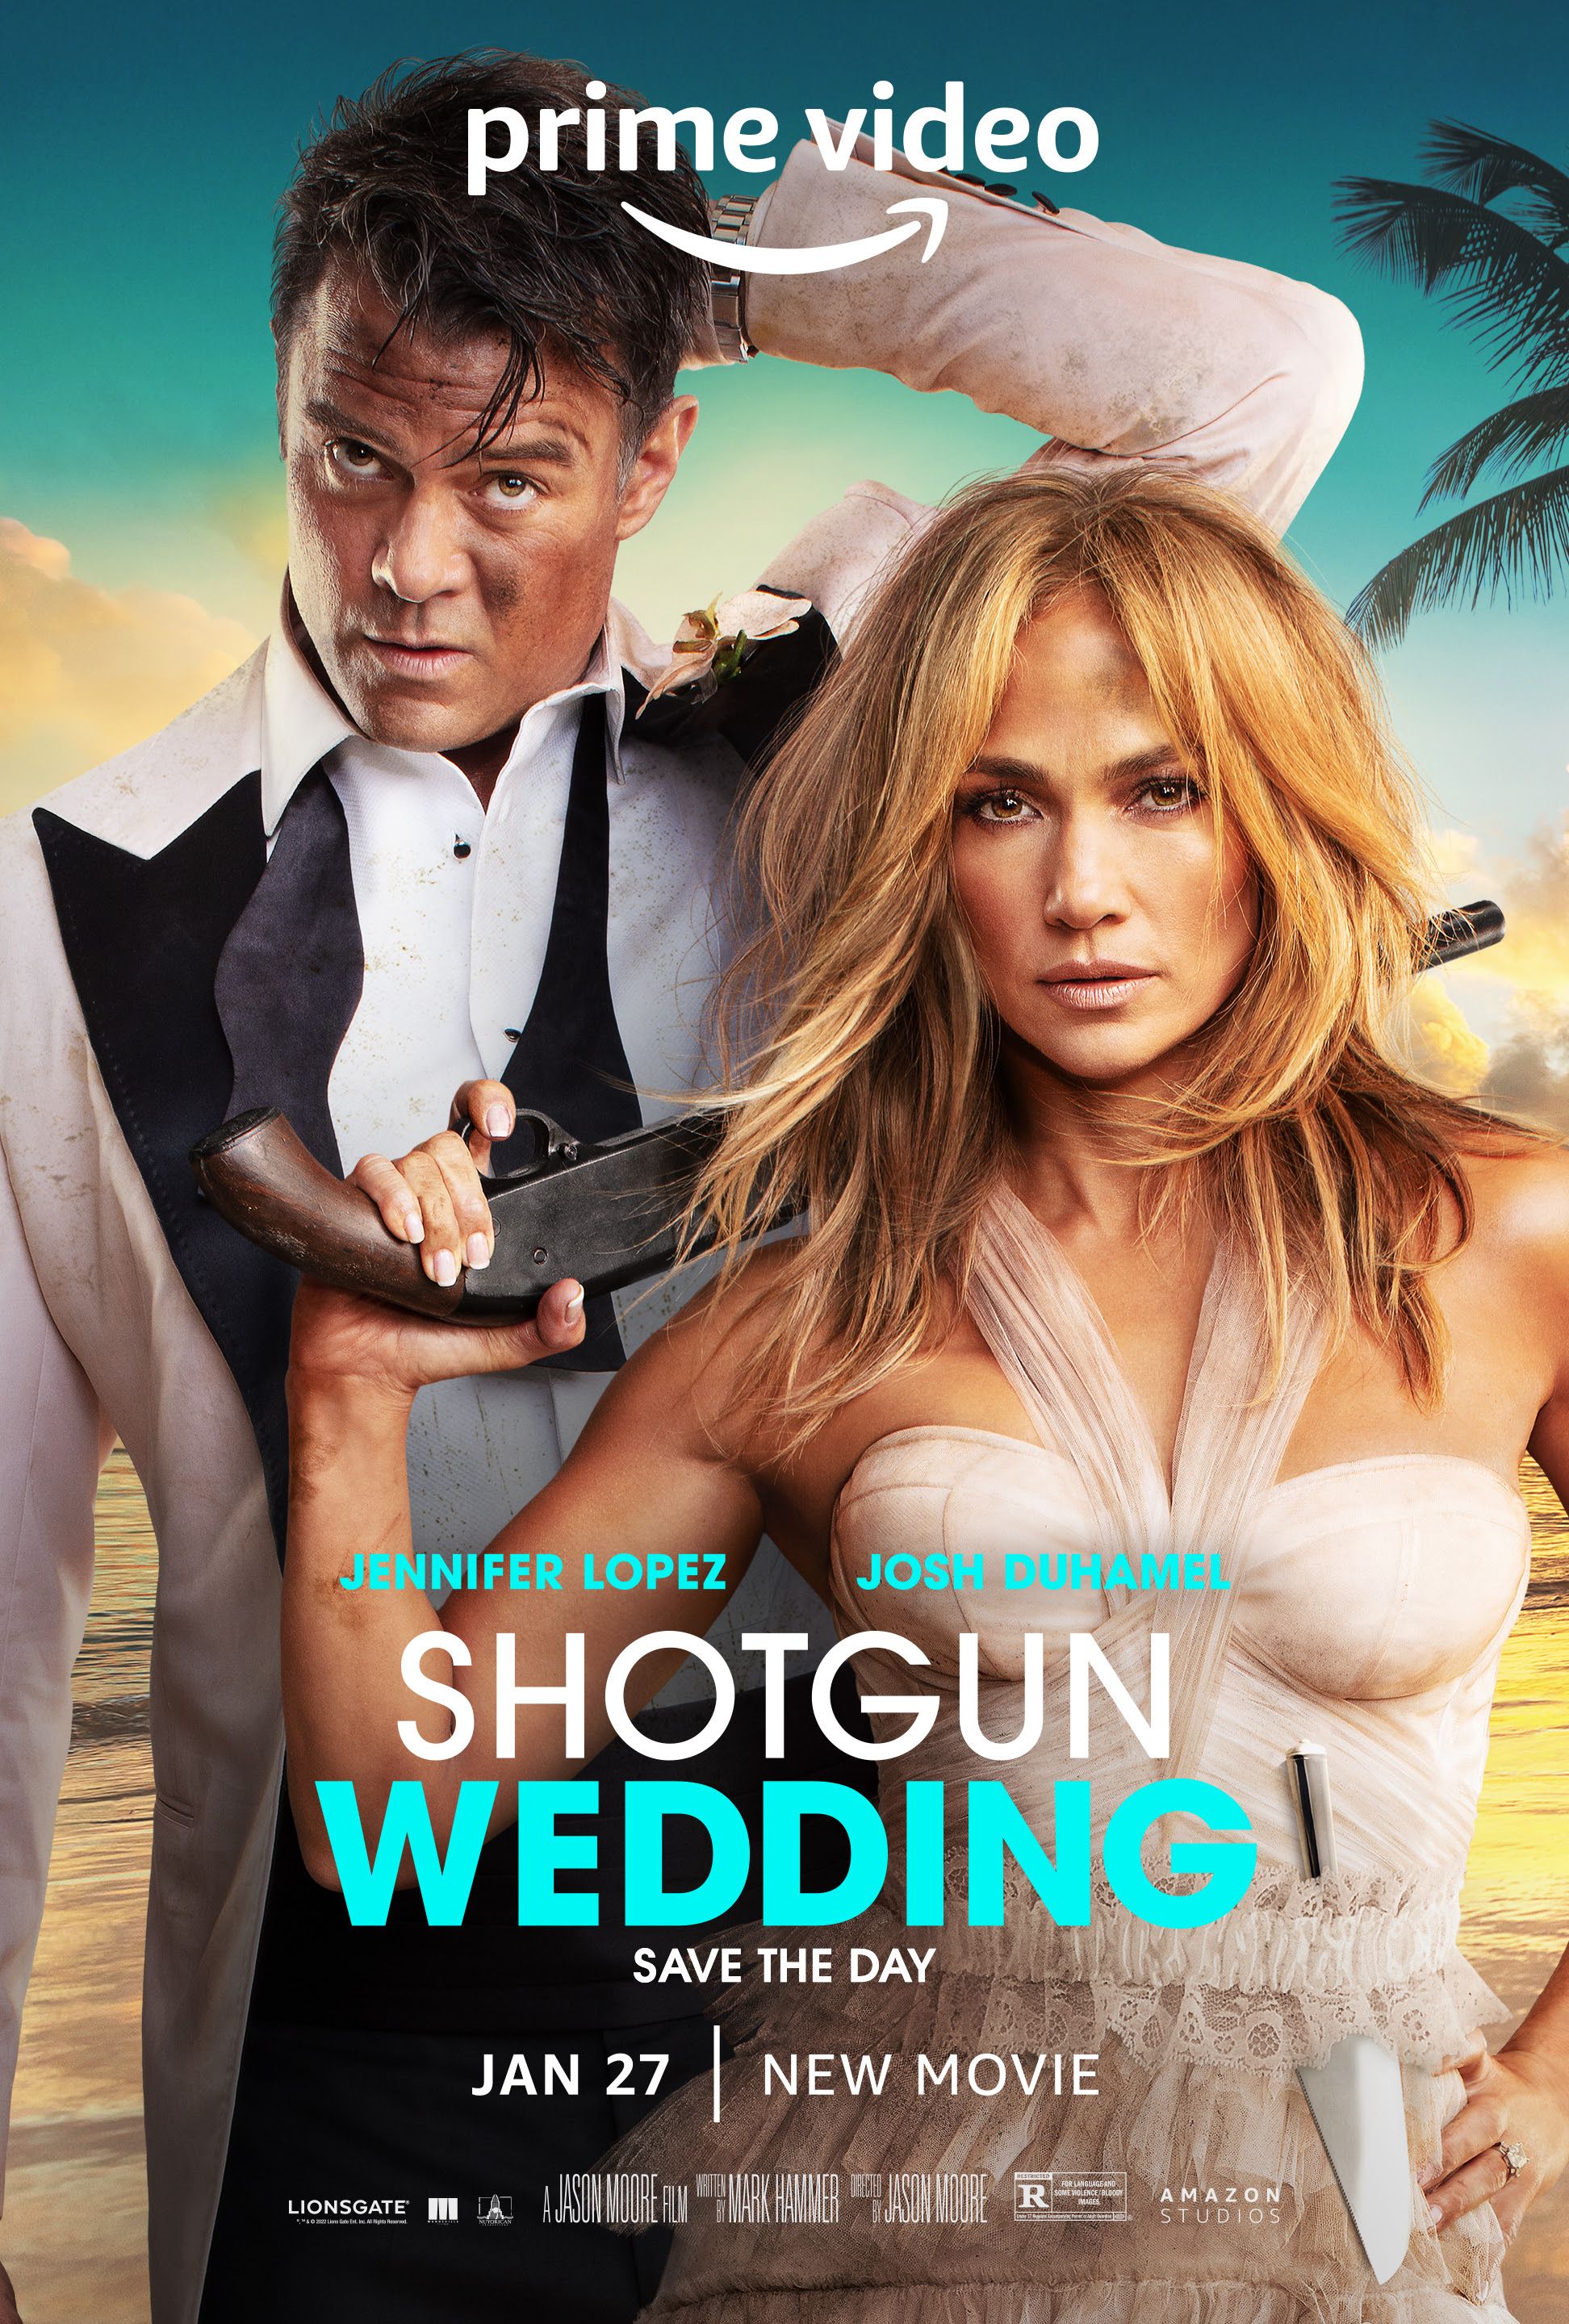 Shotgun Wedding Jennifer Lopez is Caught in the Center of a Pirate